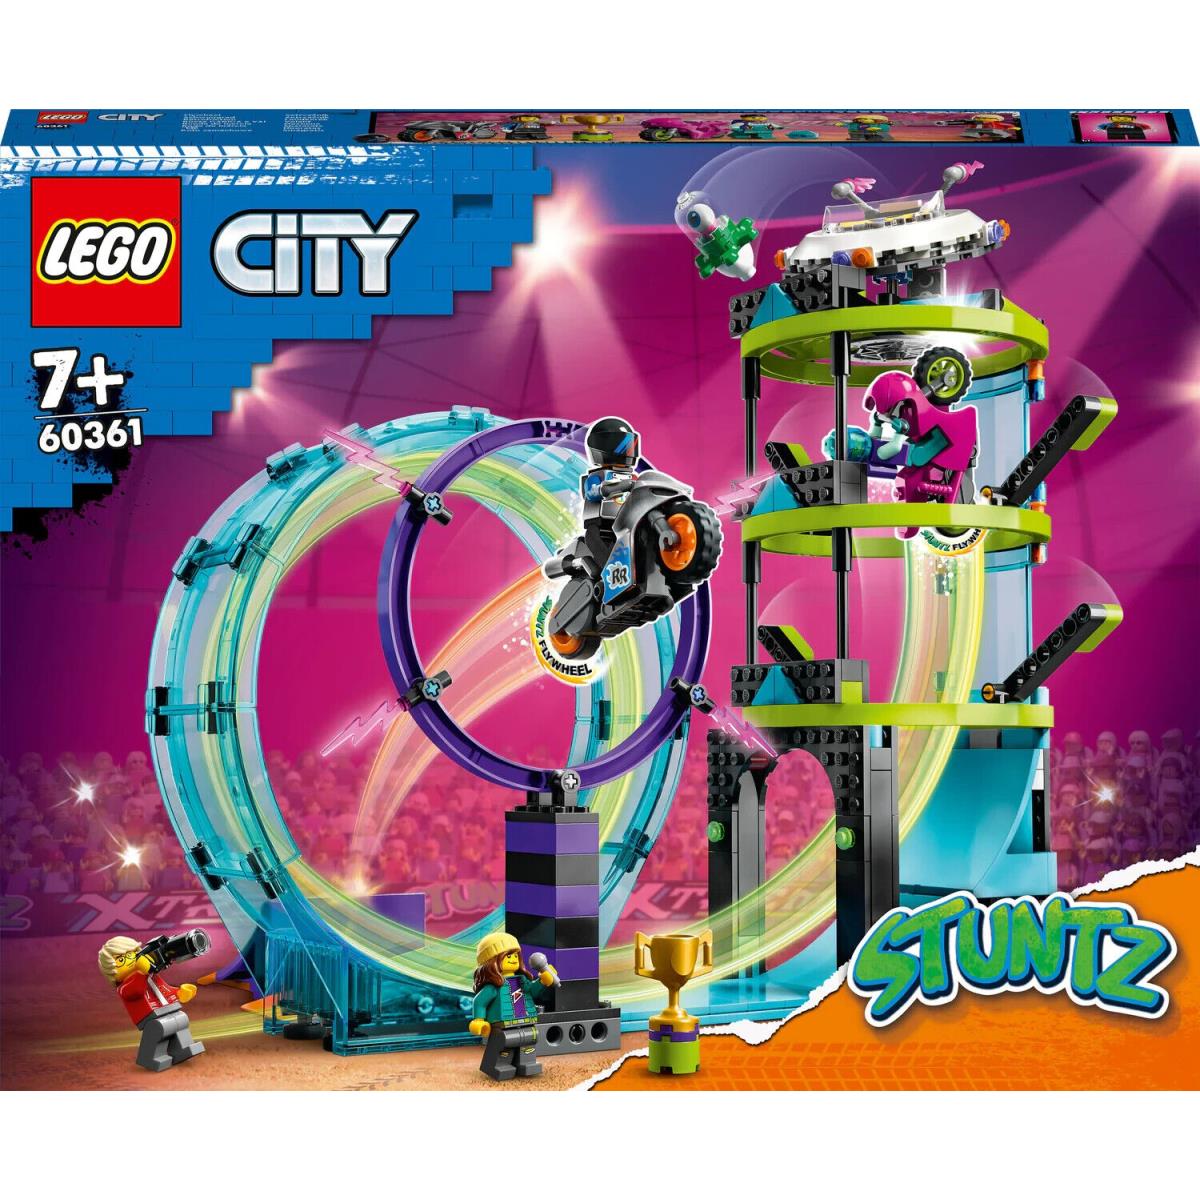 Lego City Stuntz Ultimate Stunt Riders Challenge Set 60361